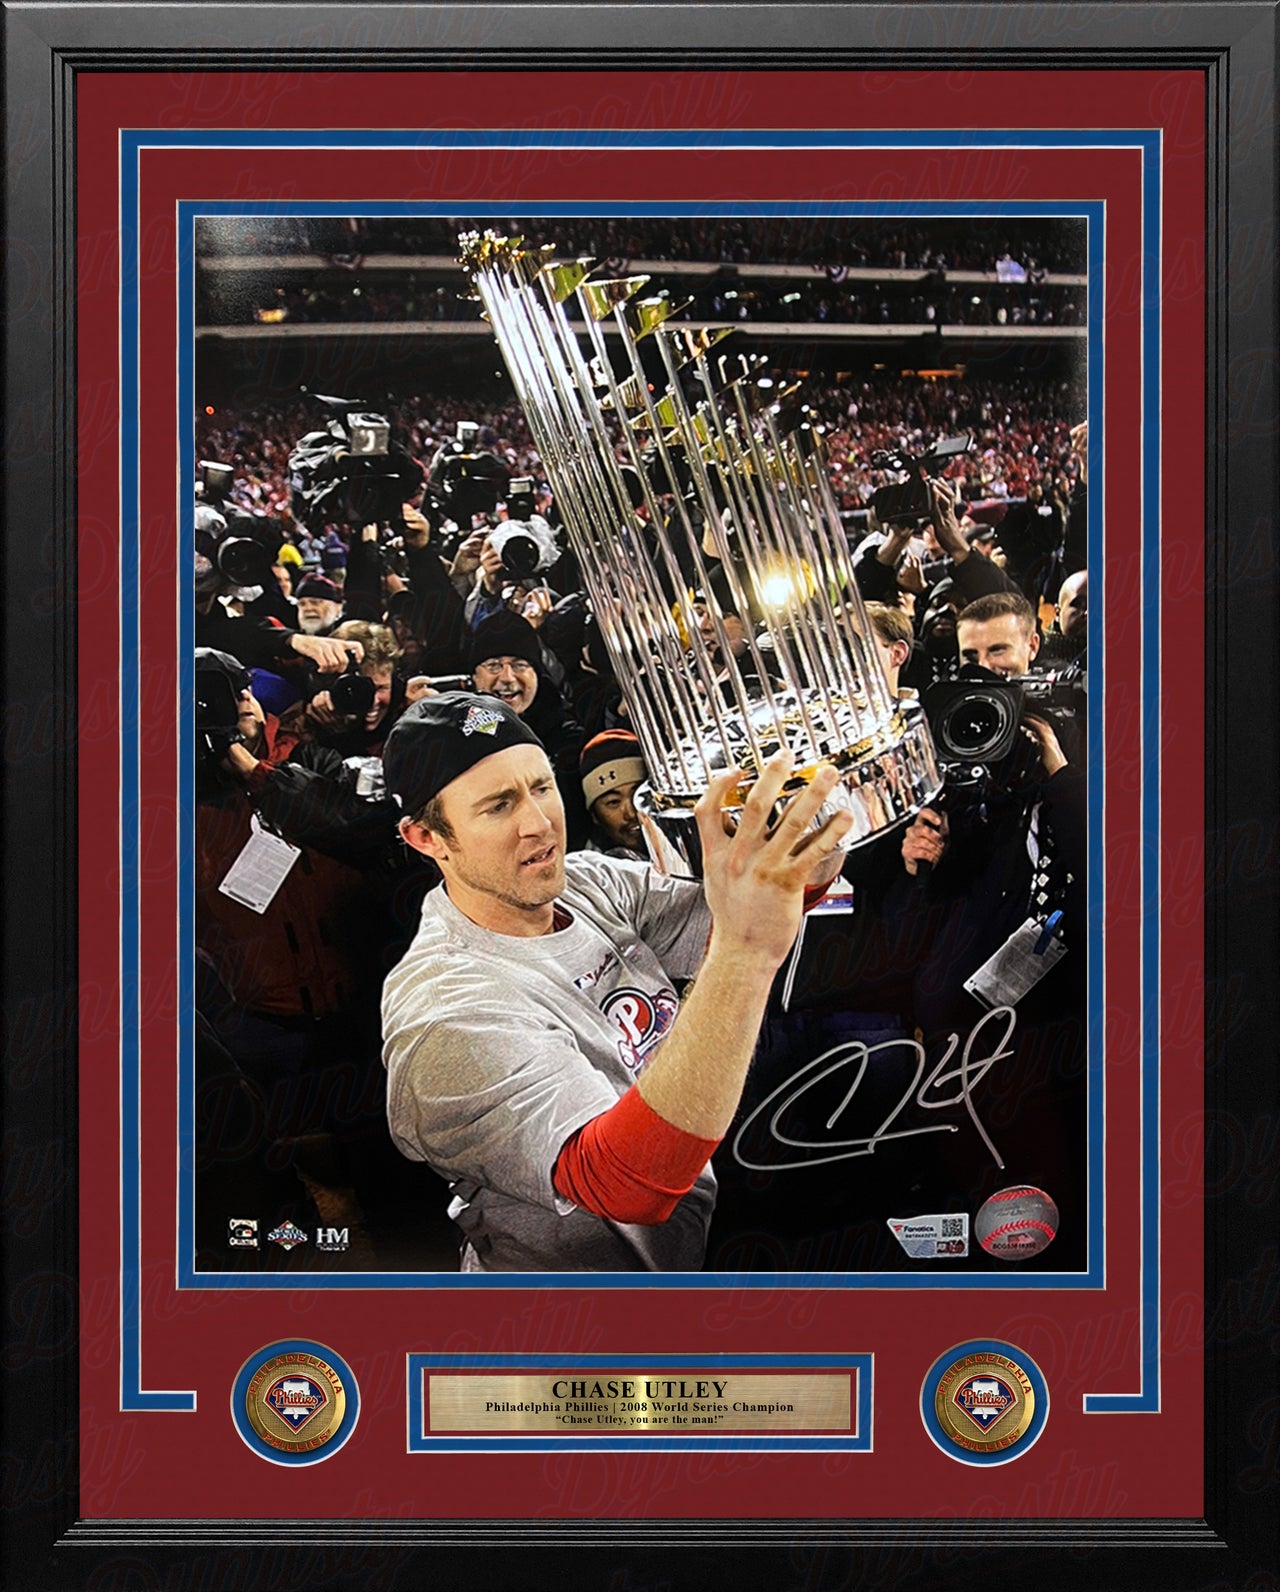 Chase Utley 2008 World Series Trophy Philadelphia Phillies Autographed 11" x 14" Framed Baseball Photo